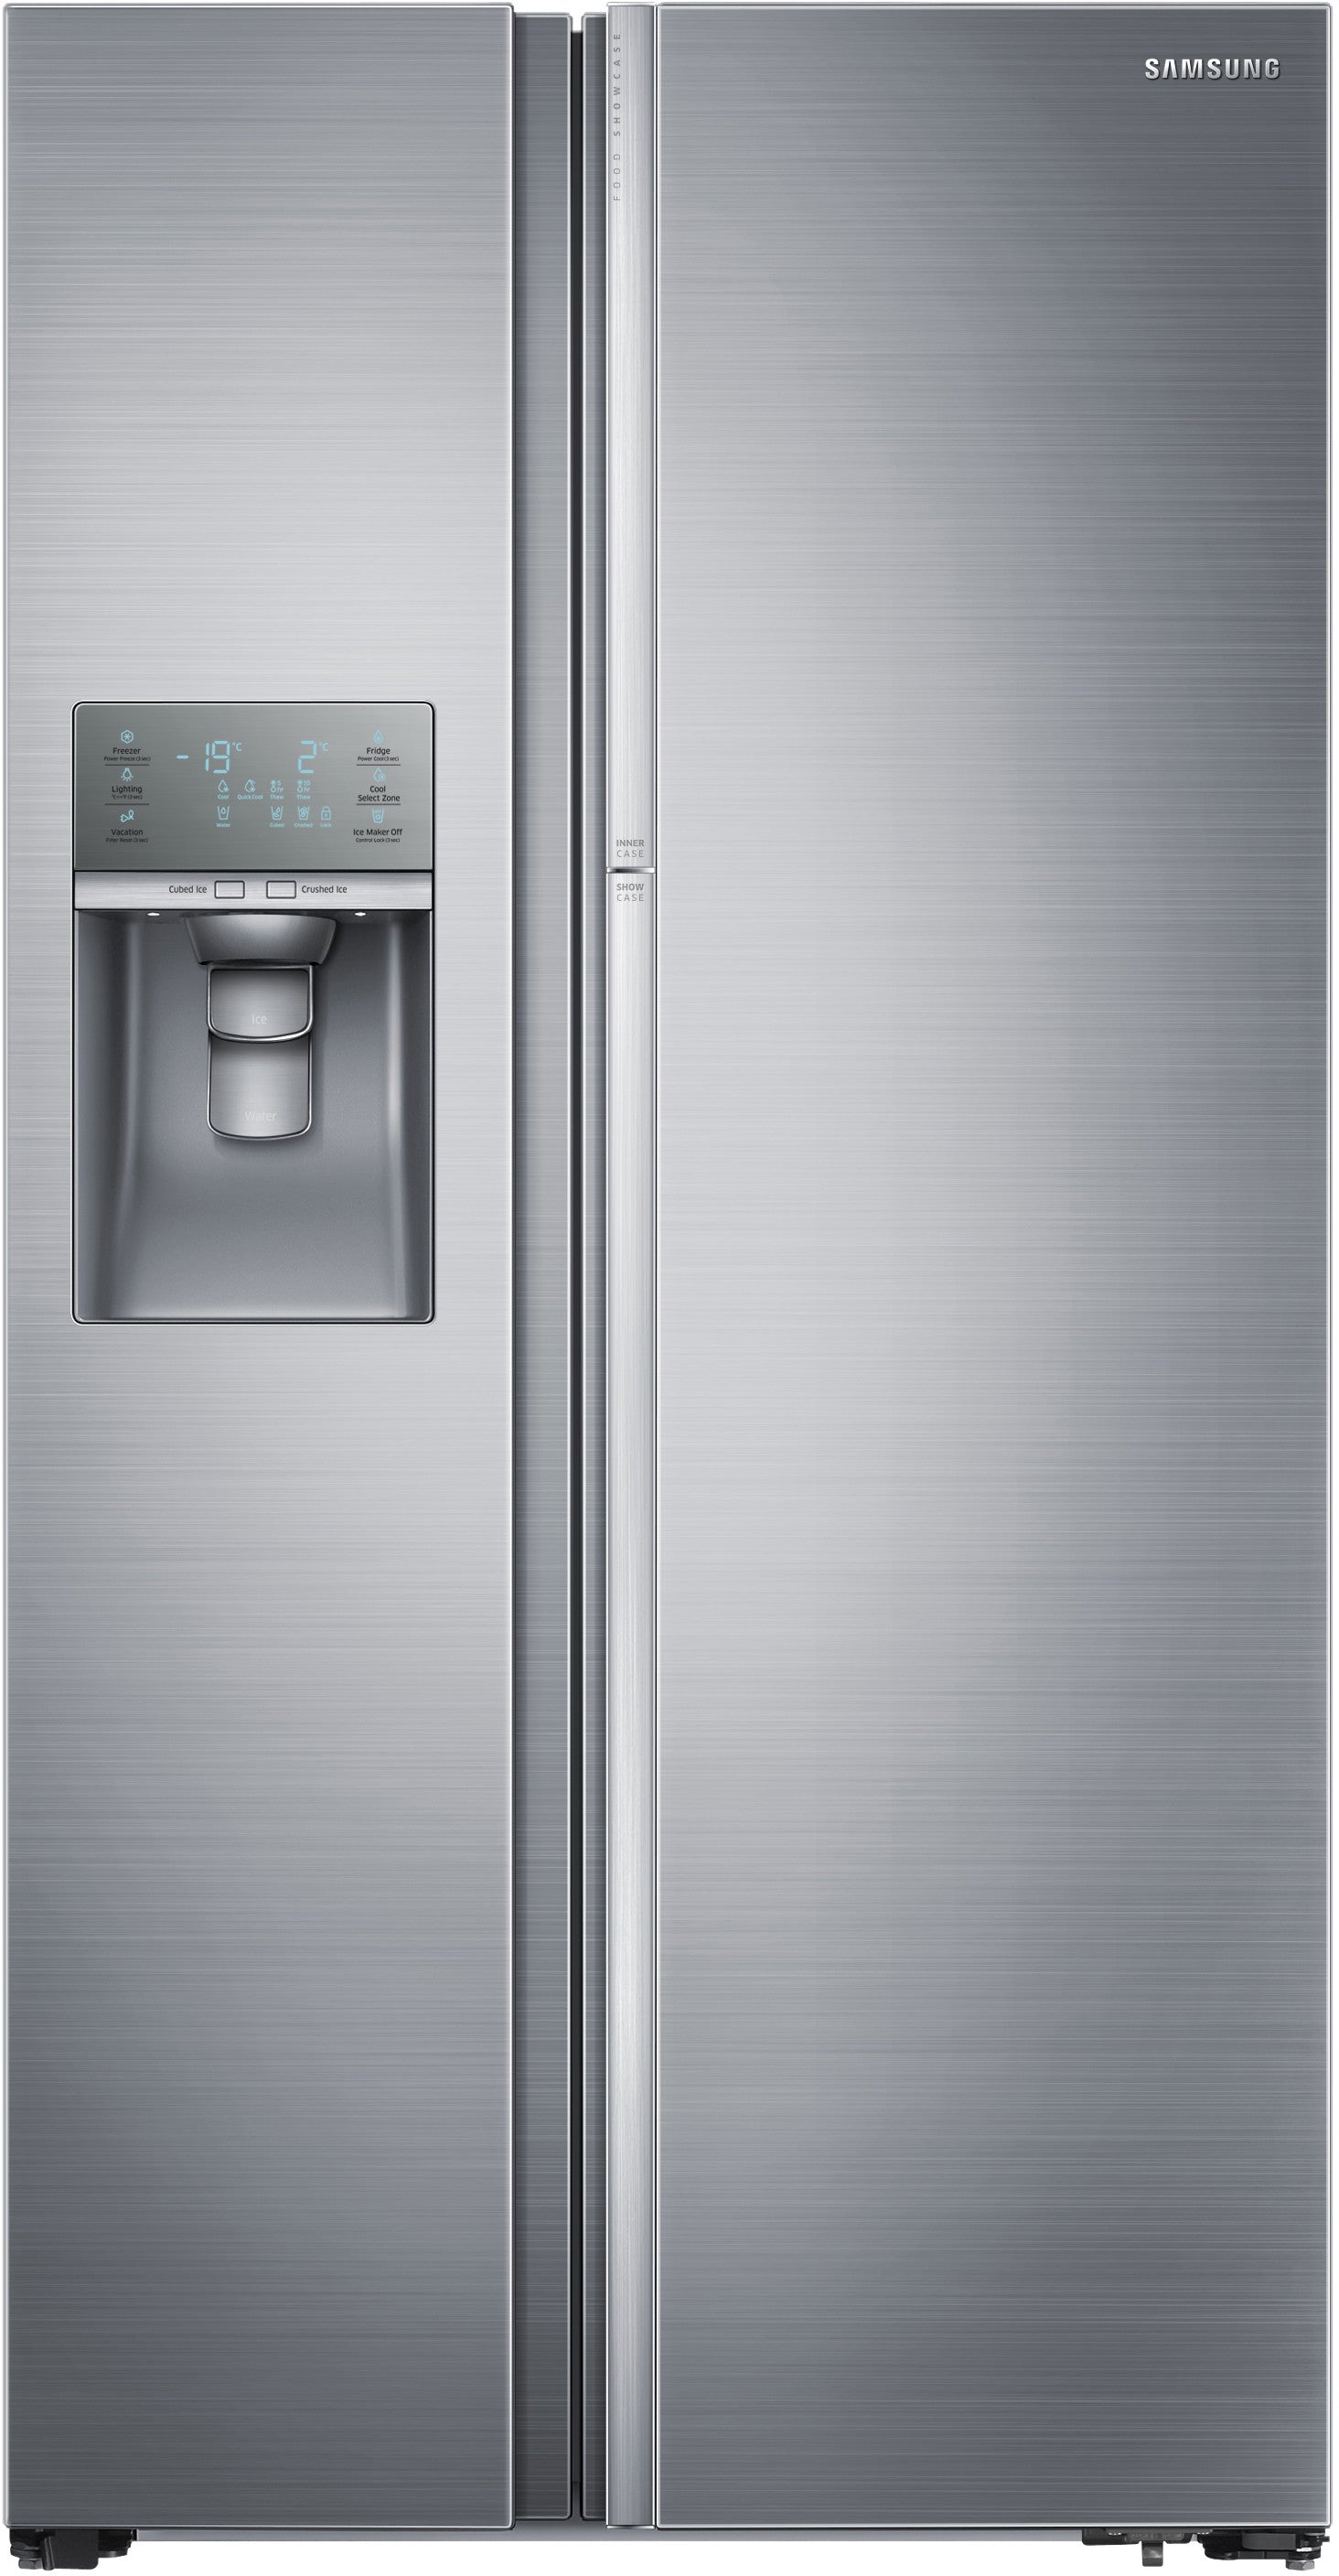 Samsung RH29H9000SR/AA 28.7 Cu. Ft. Side-by-side Refrigerator